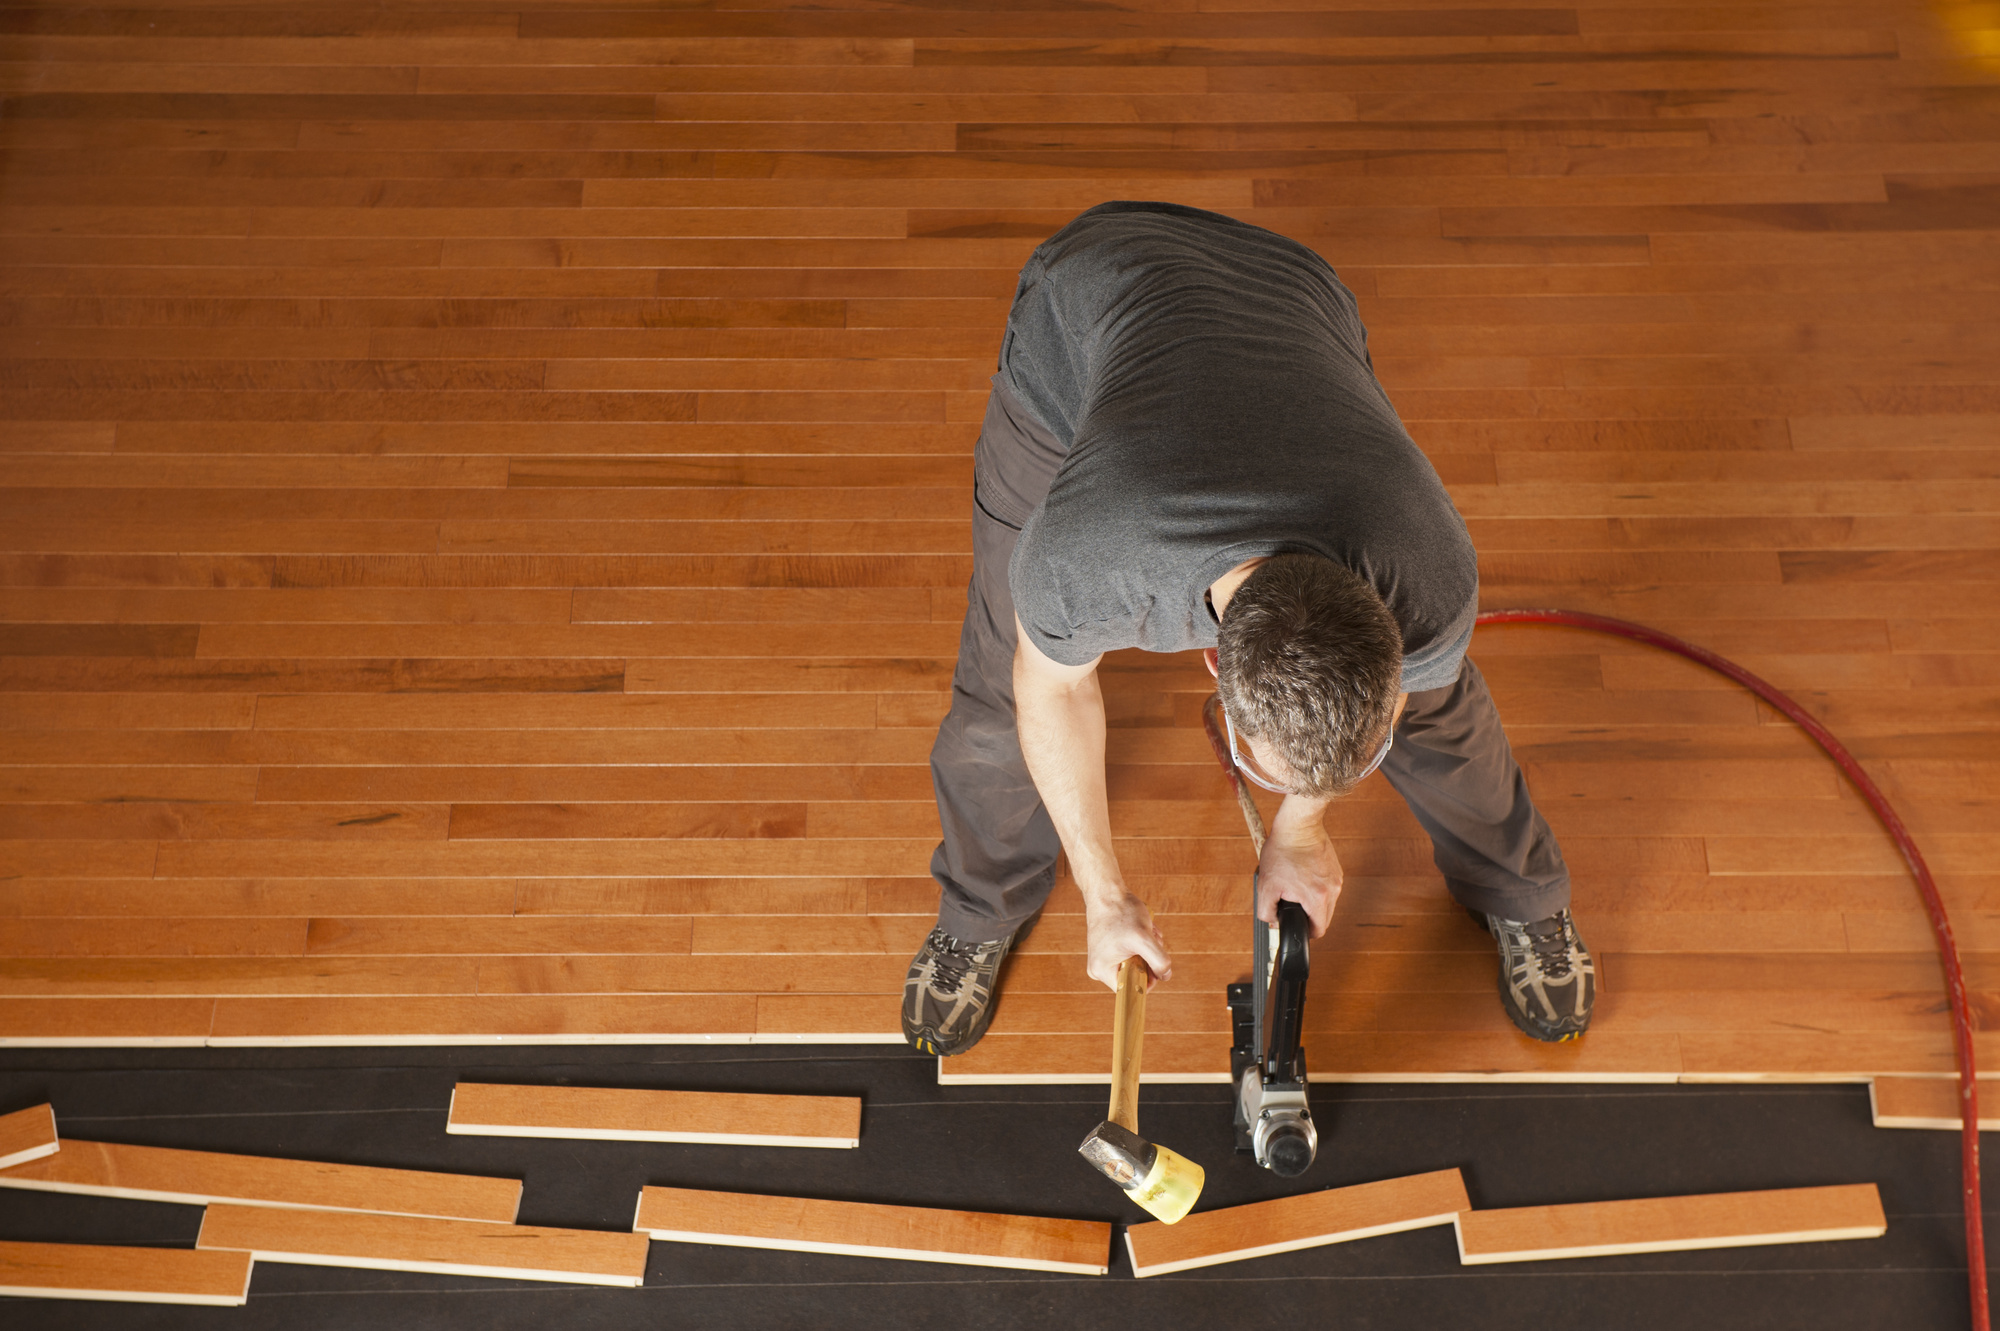 Hardwood Flooring Cost To Install, Red Oak Hardwood Flooring Cost